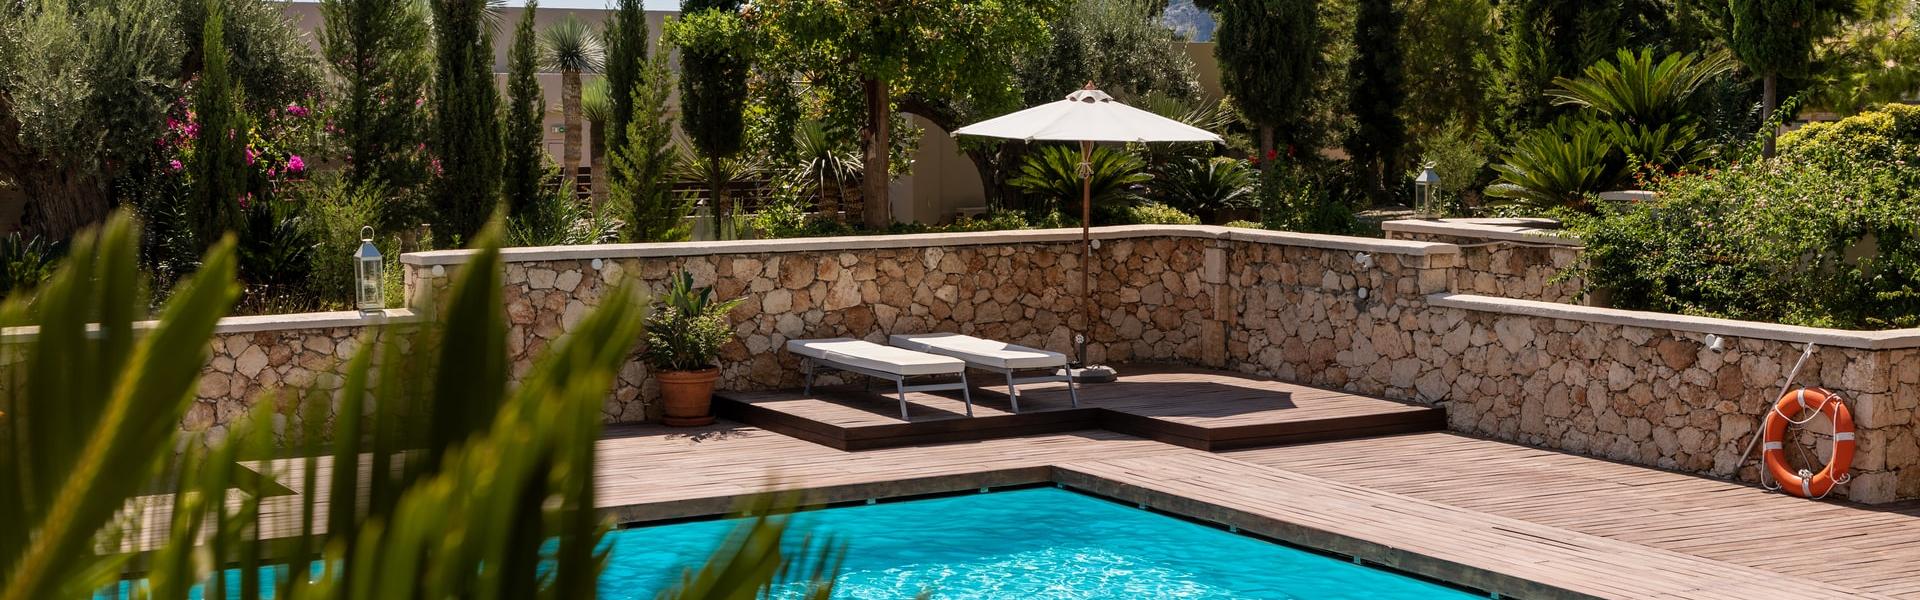 Ferienhaus mit Pool in Palma de Mallorca - Wimdu